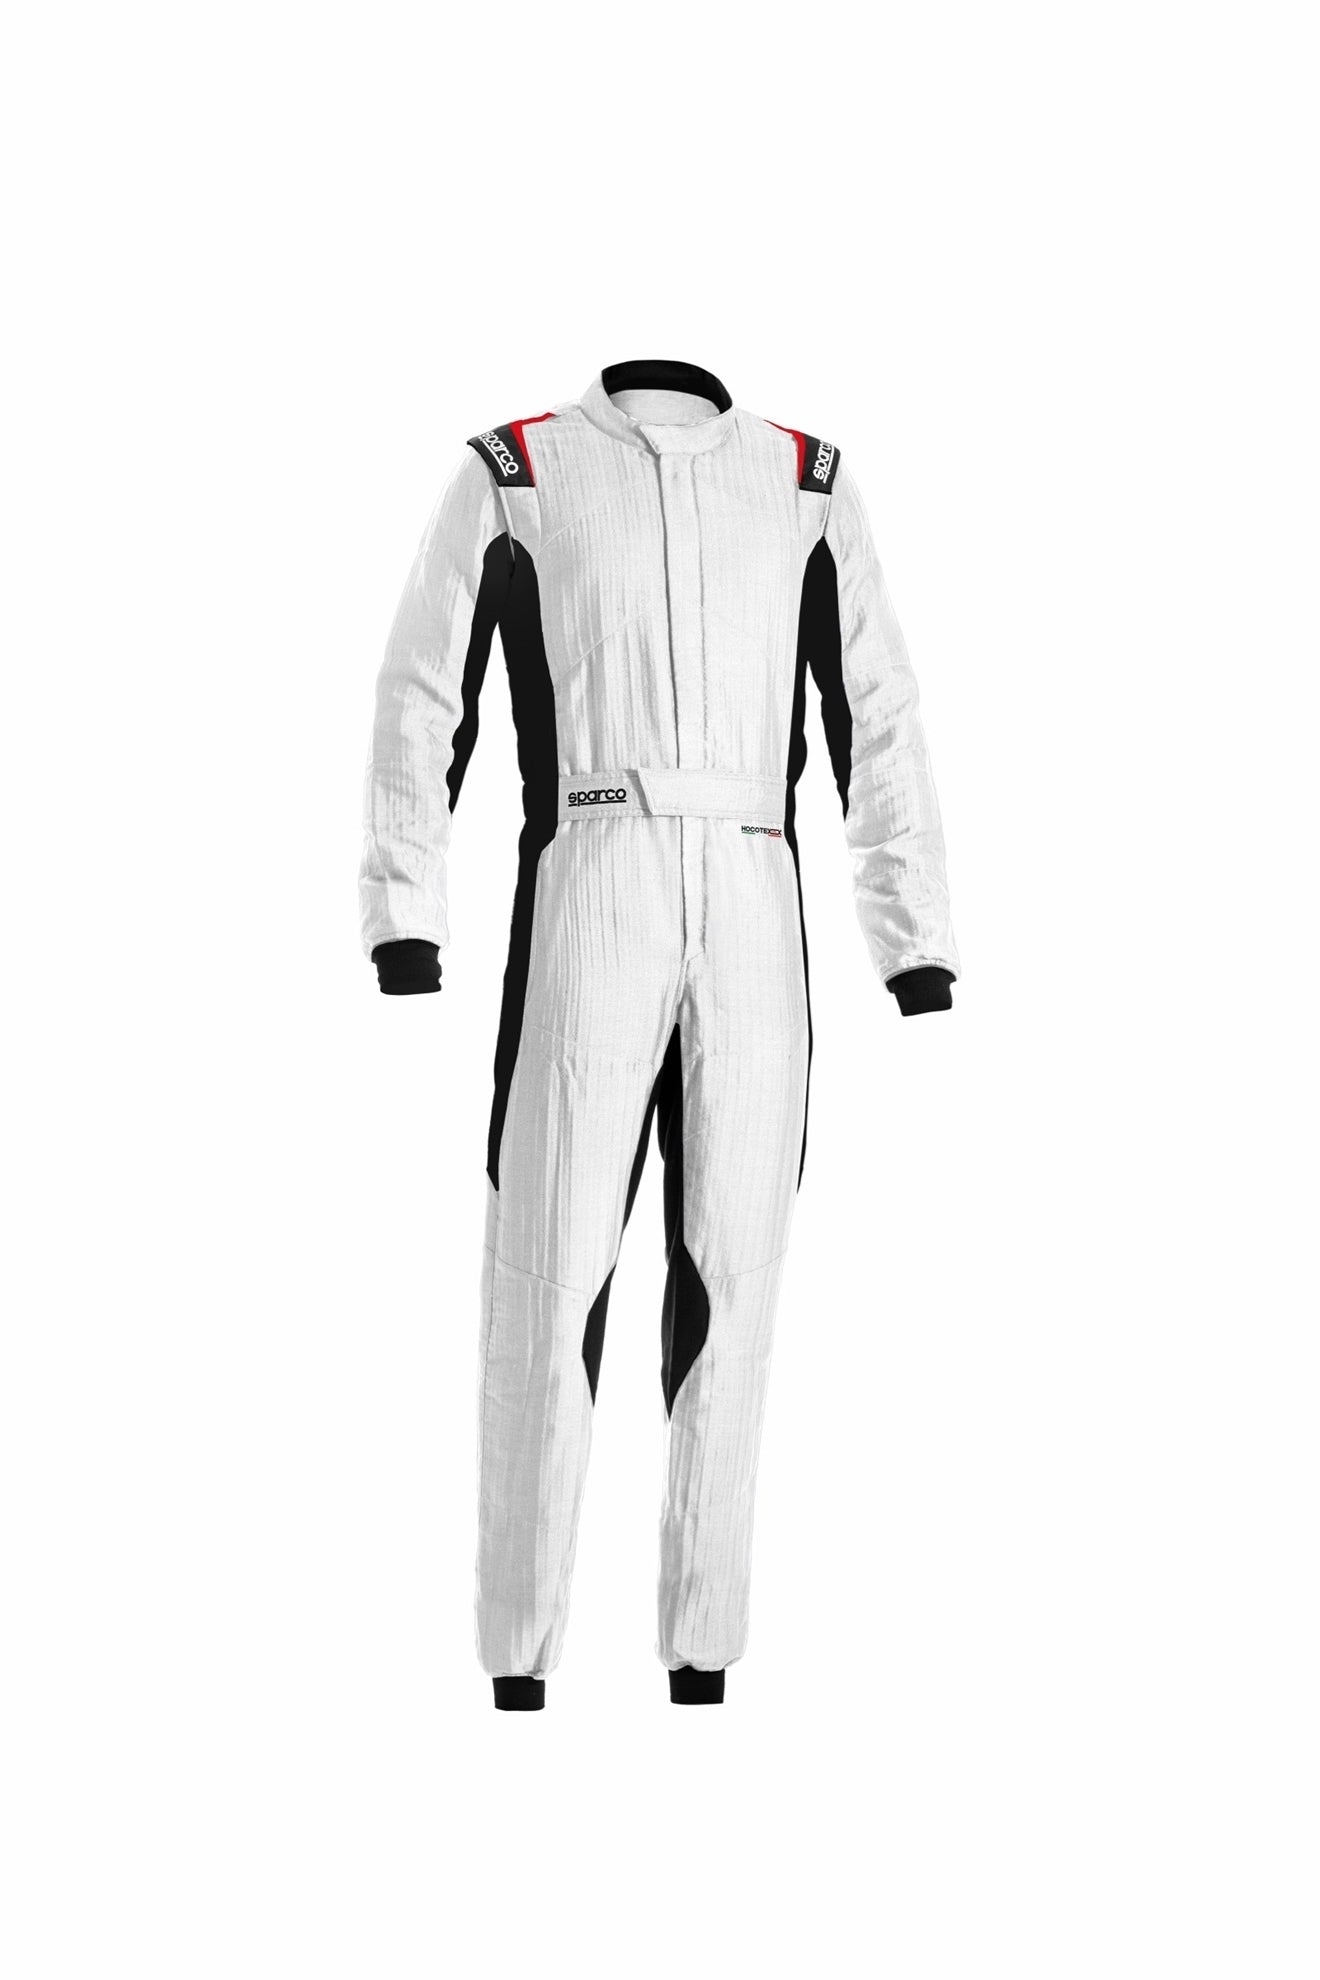 Sparco Eagle 2.0 Racing Suit